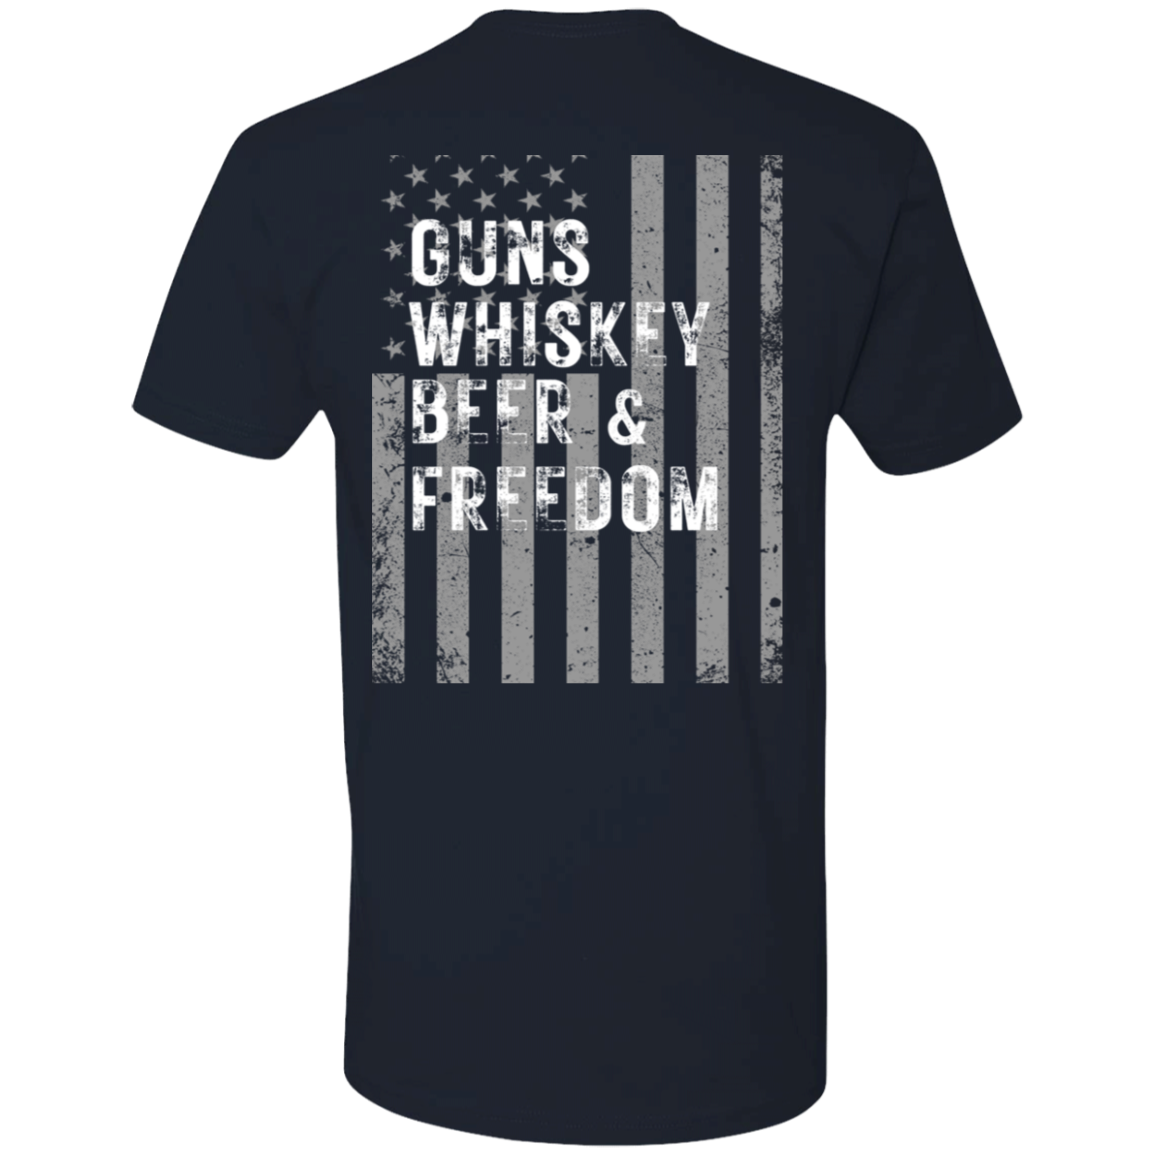 Guns Whiskey Beer & Freedom T-shirt